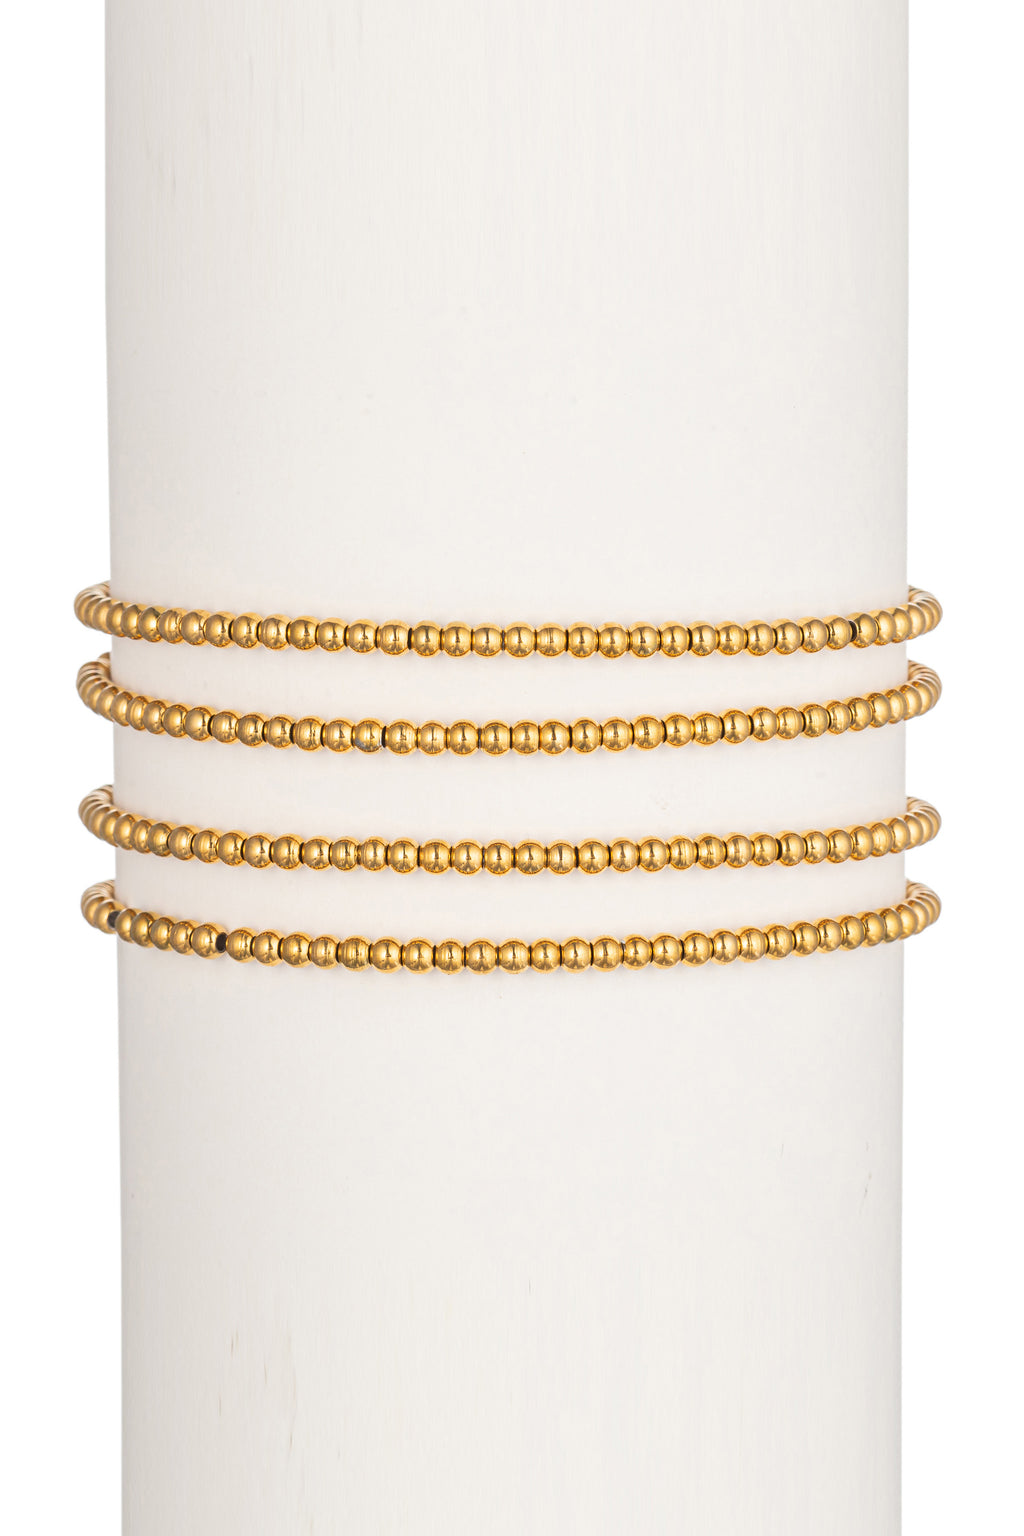 Gold tone titanium 3mm stretch band beaded bracelet set.